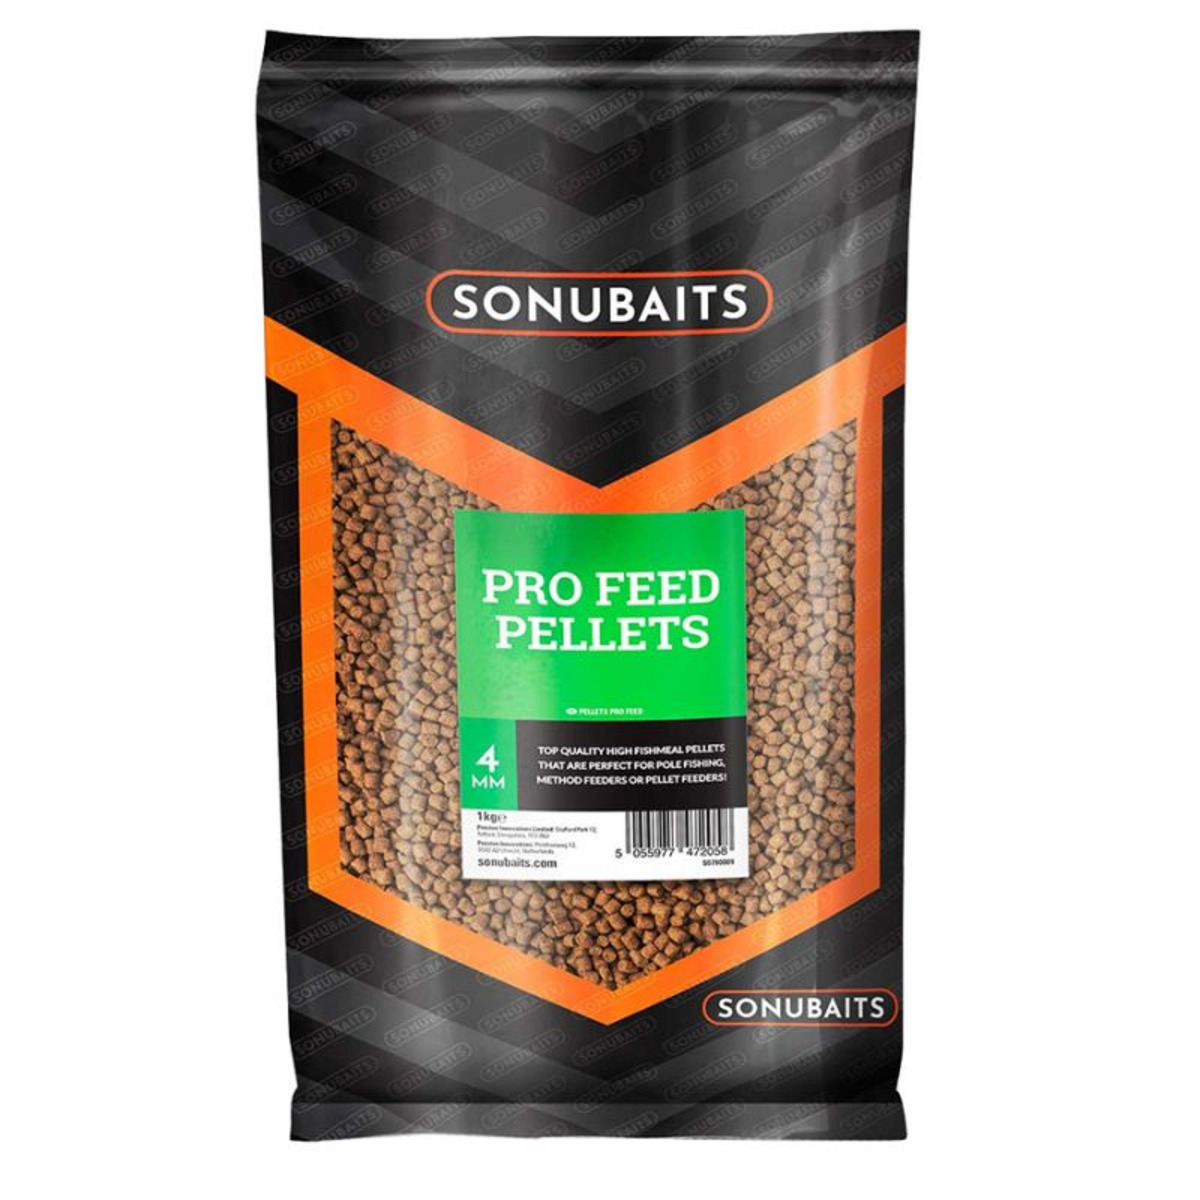 Sonubaits Pro Feed Pellets - 4 mm - 1 kg